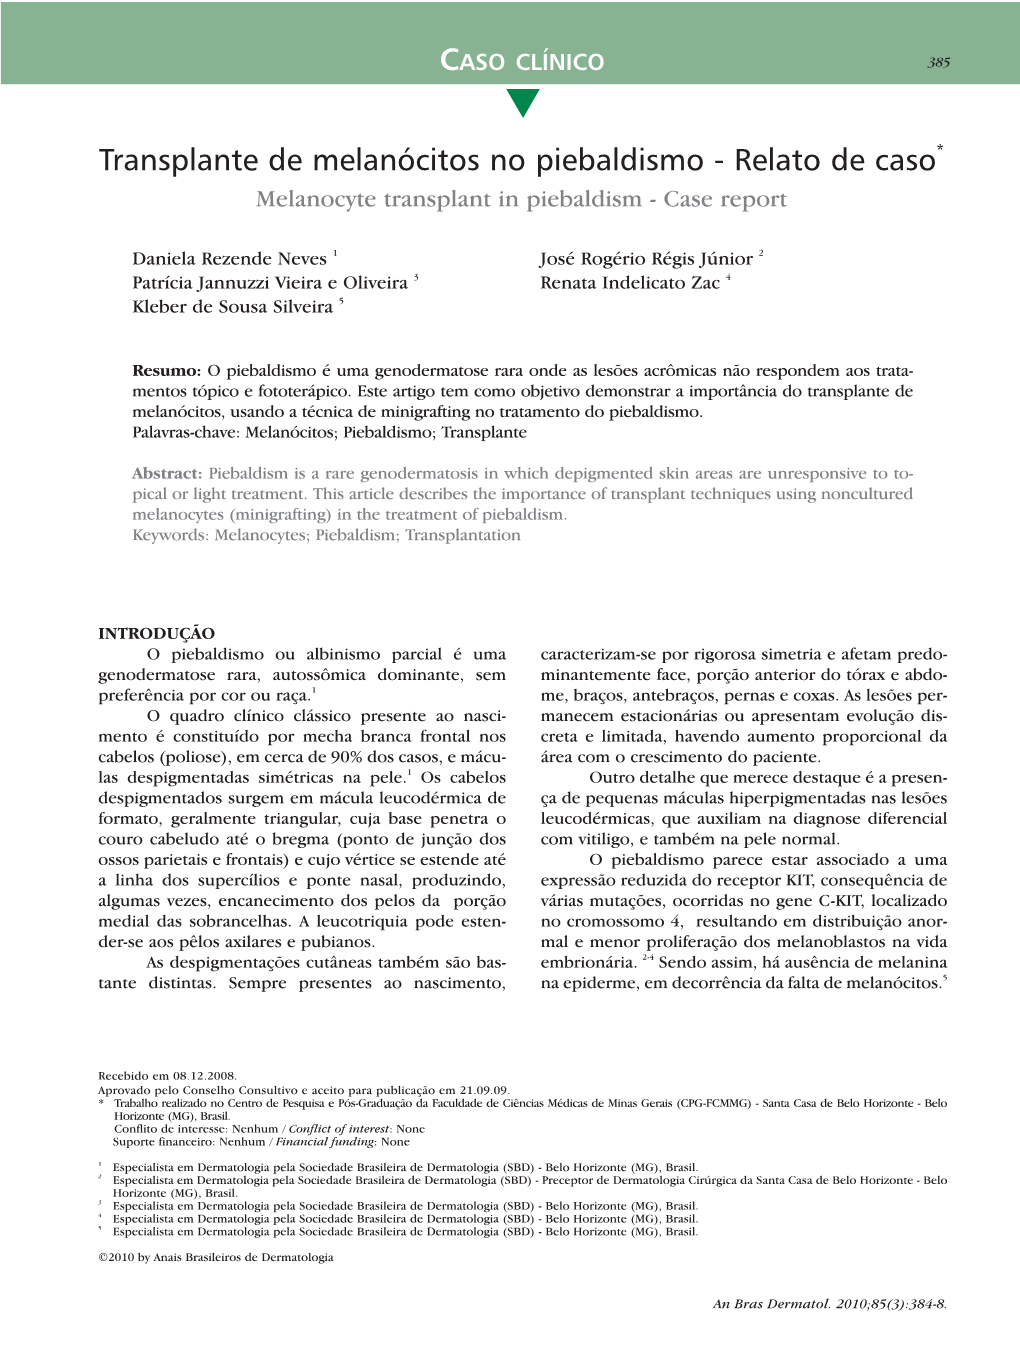 Melanocyte Transplant in Piebaldism - Case Report Report Case - Piebaldism in Transplant Melanocyte